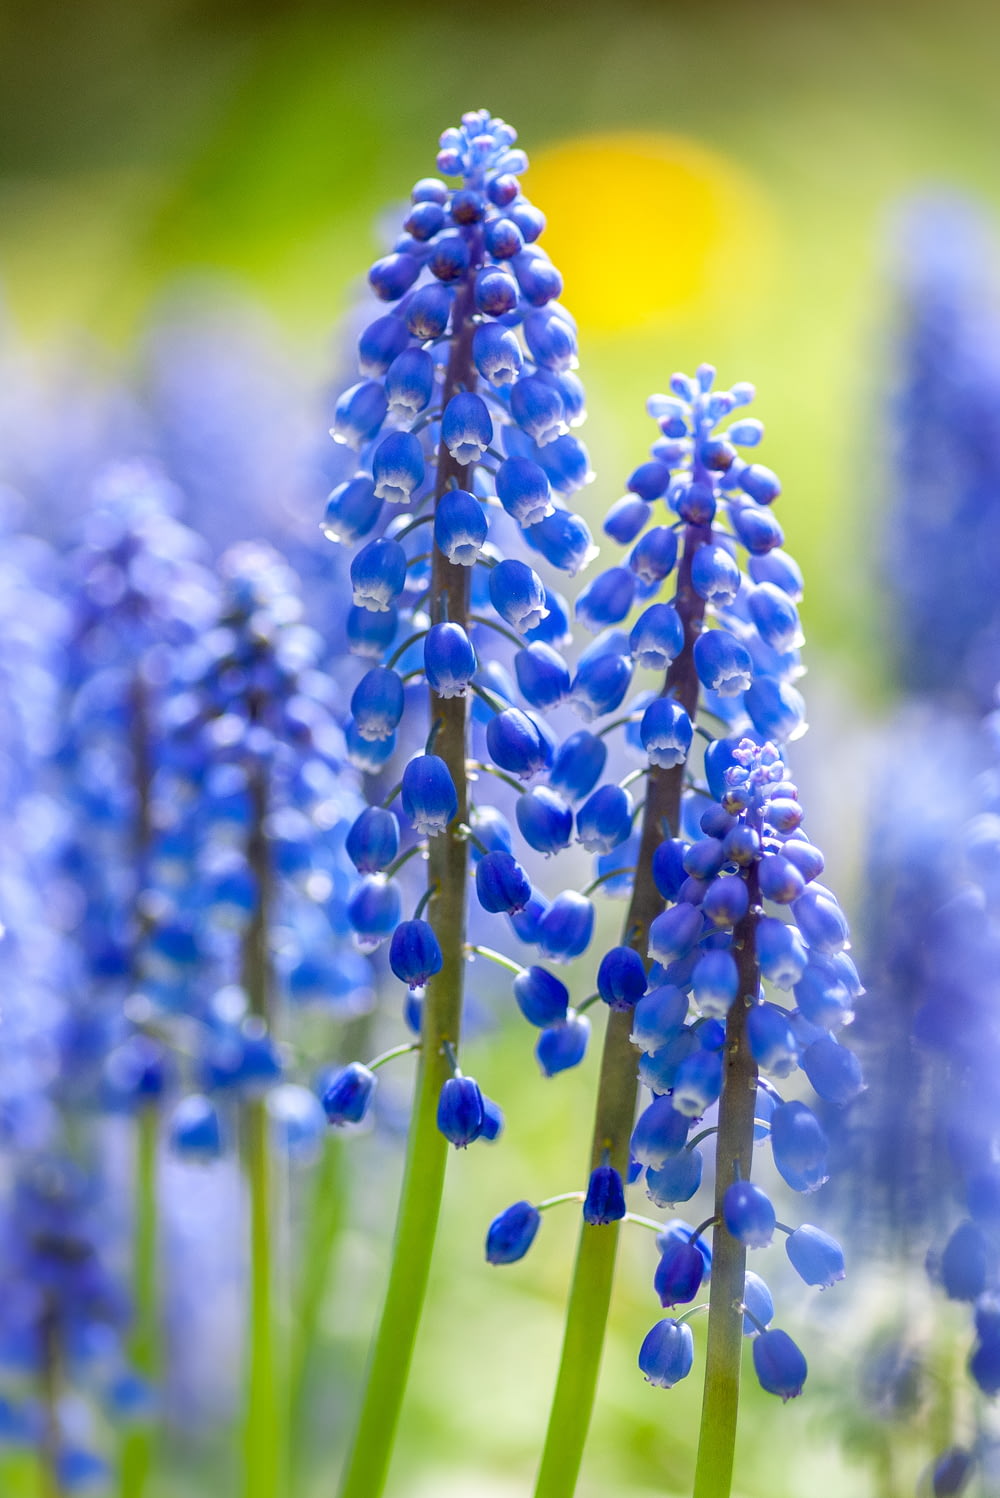 blue flowers close-up photo